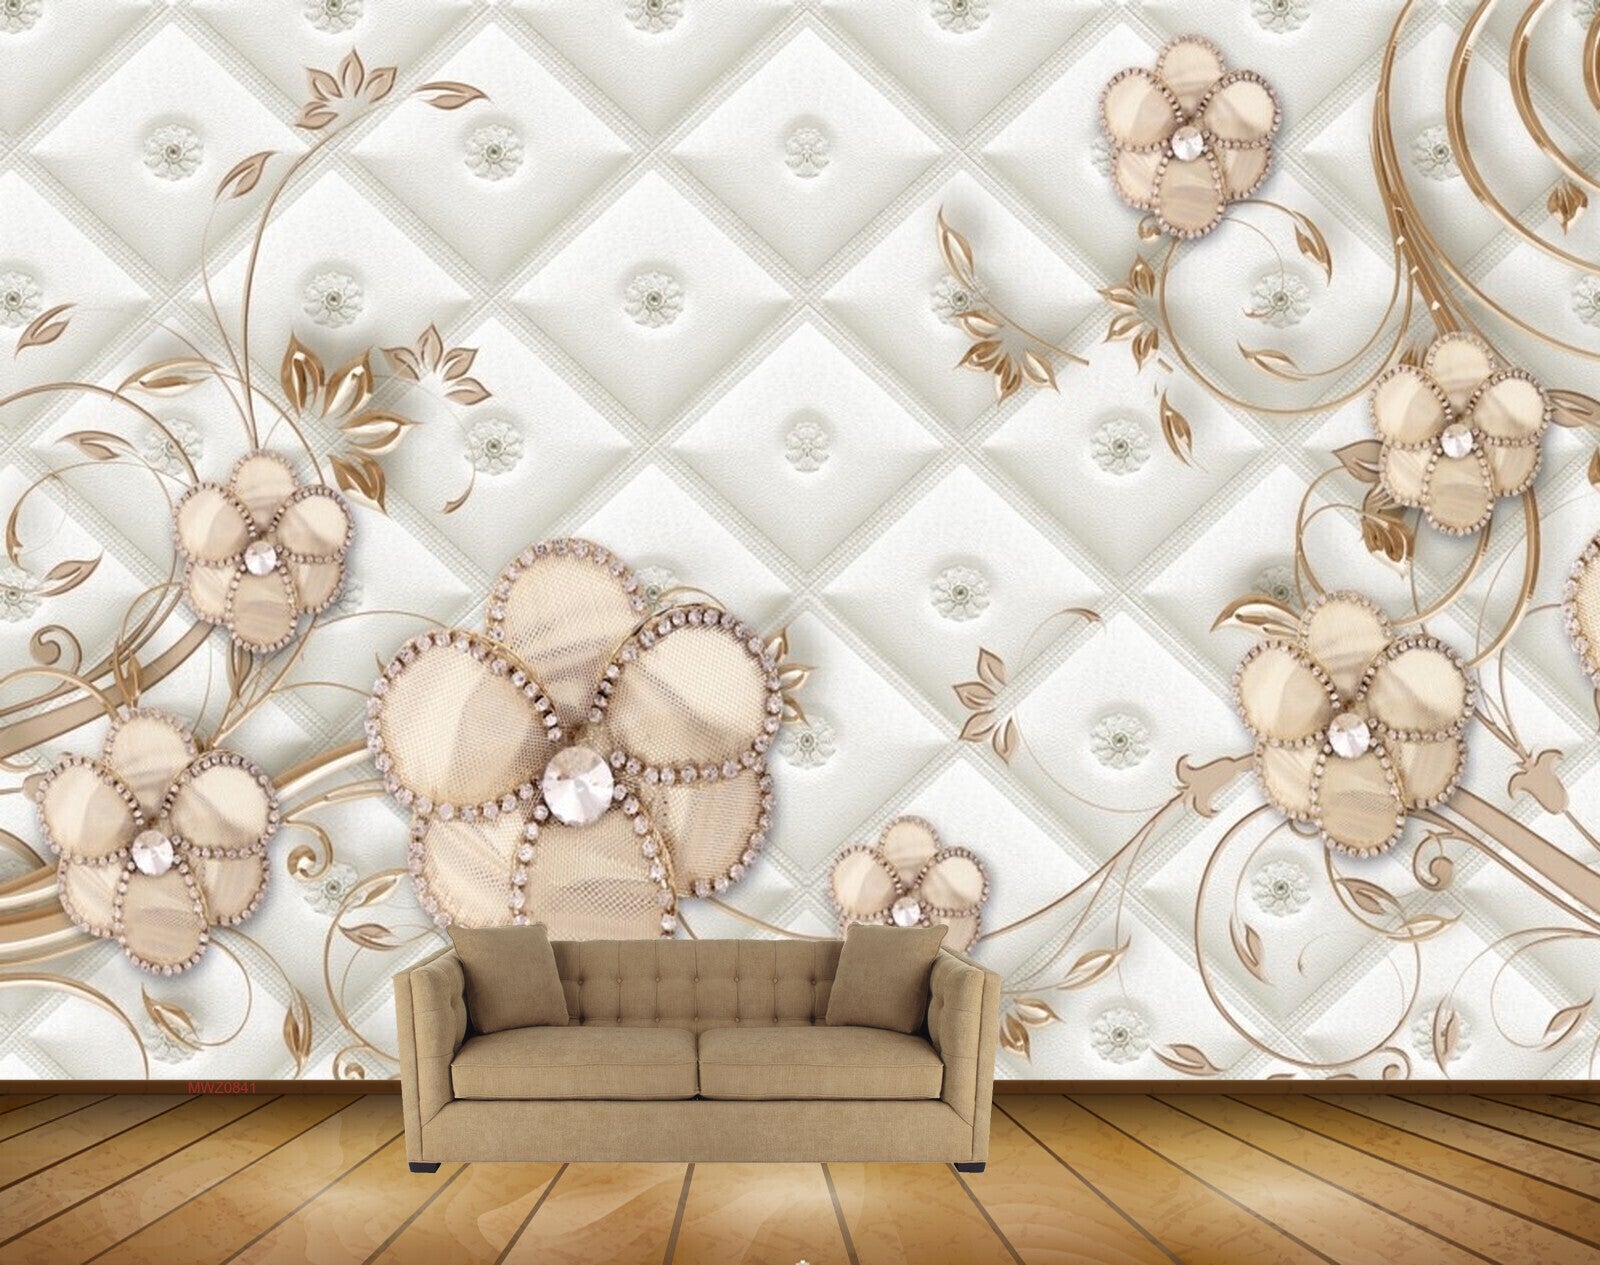 Harga Wallpaper Dinding – Tips Mengaplikasikan Wallpaper Untuk Rumah Modern  Minimalis – Kumpulan Info Menarik Dan Terbaru